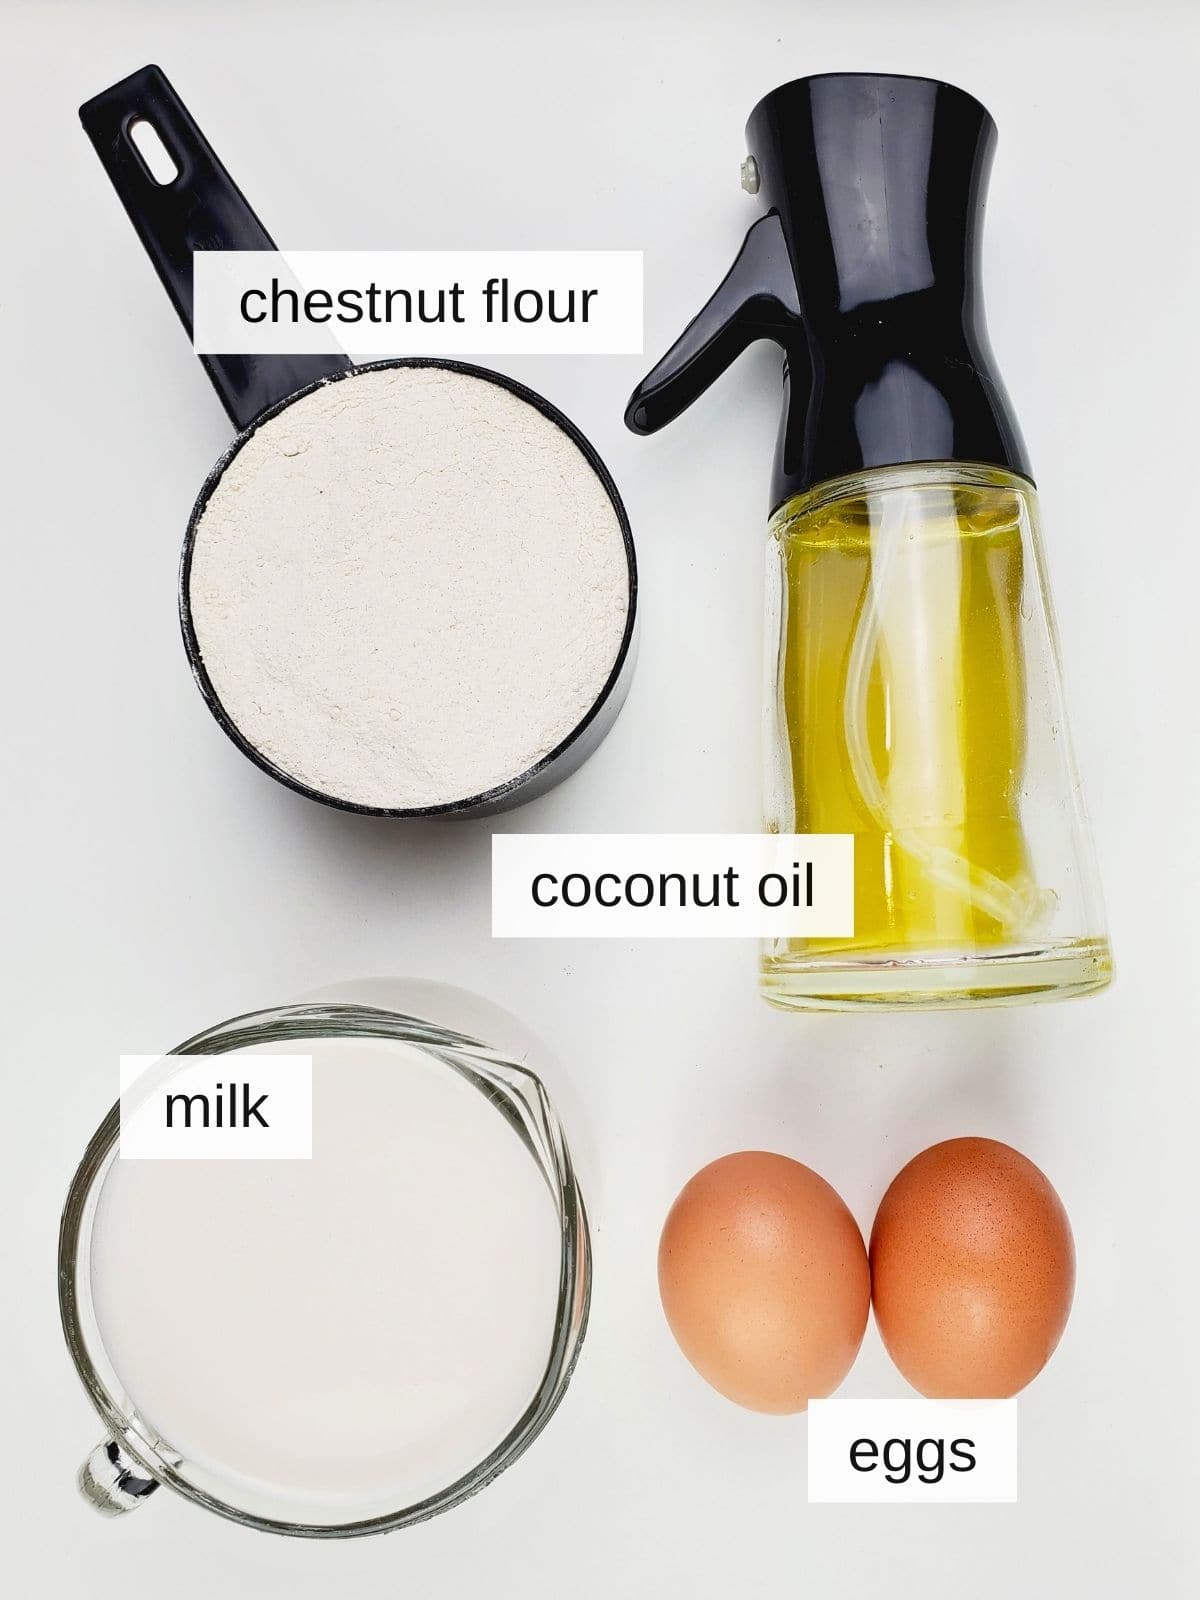 ingredients for chestnut flour crepes, including chestnut flour, coconut oil, eggs, and milk.